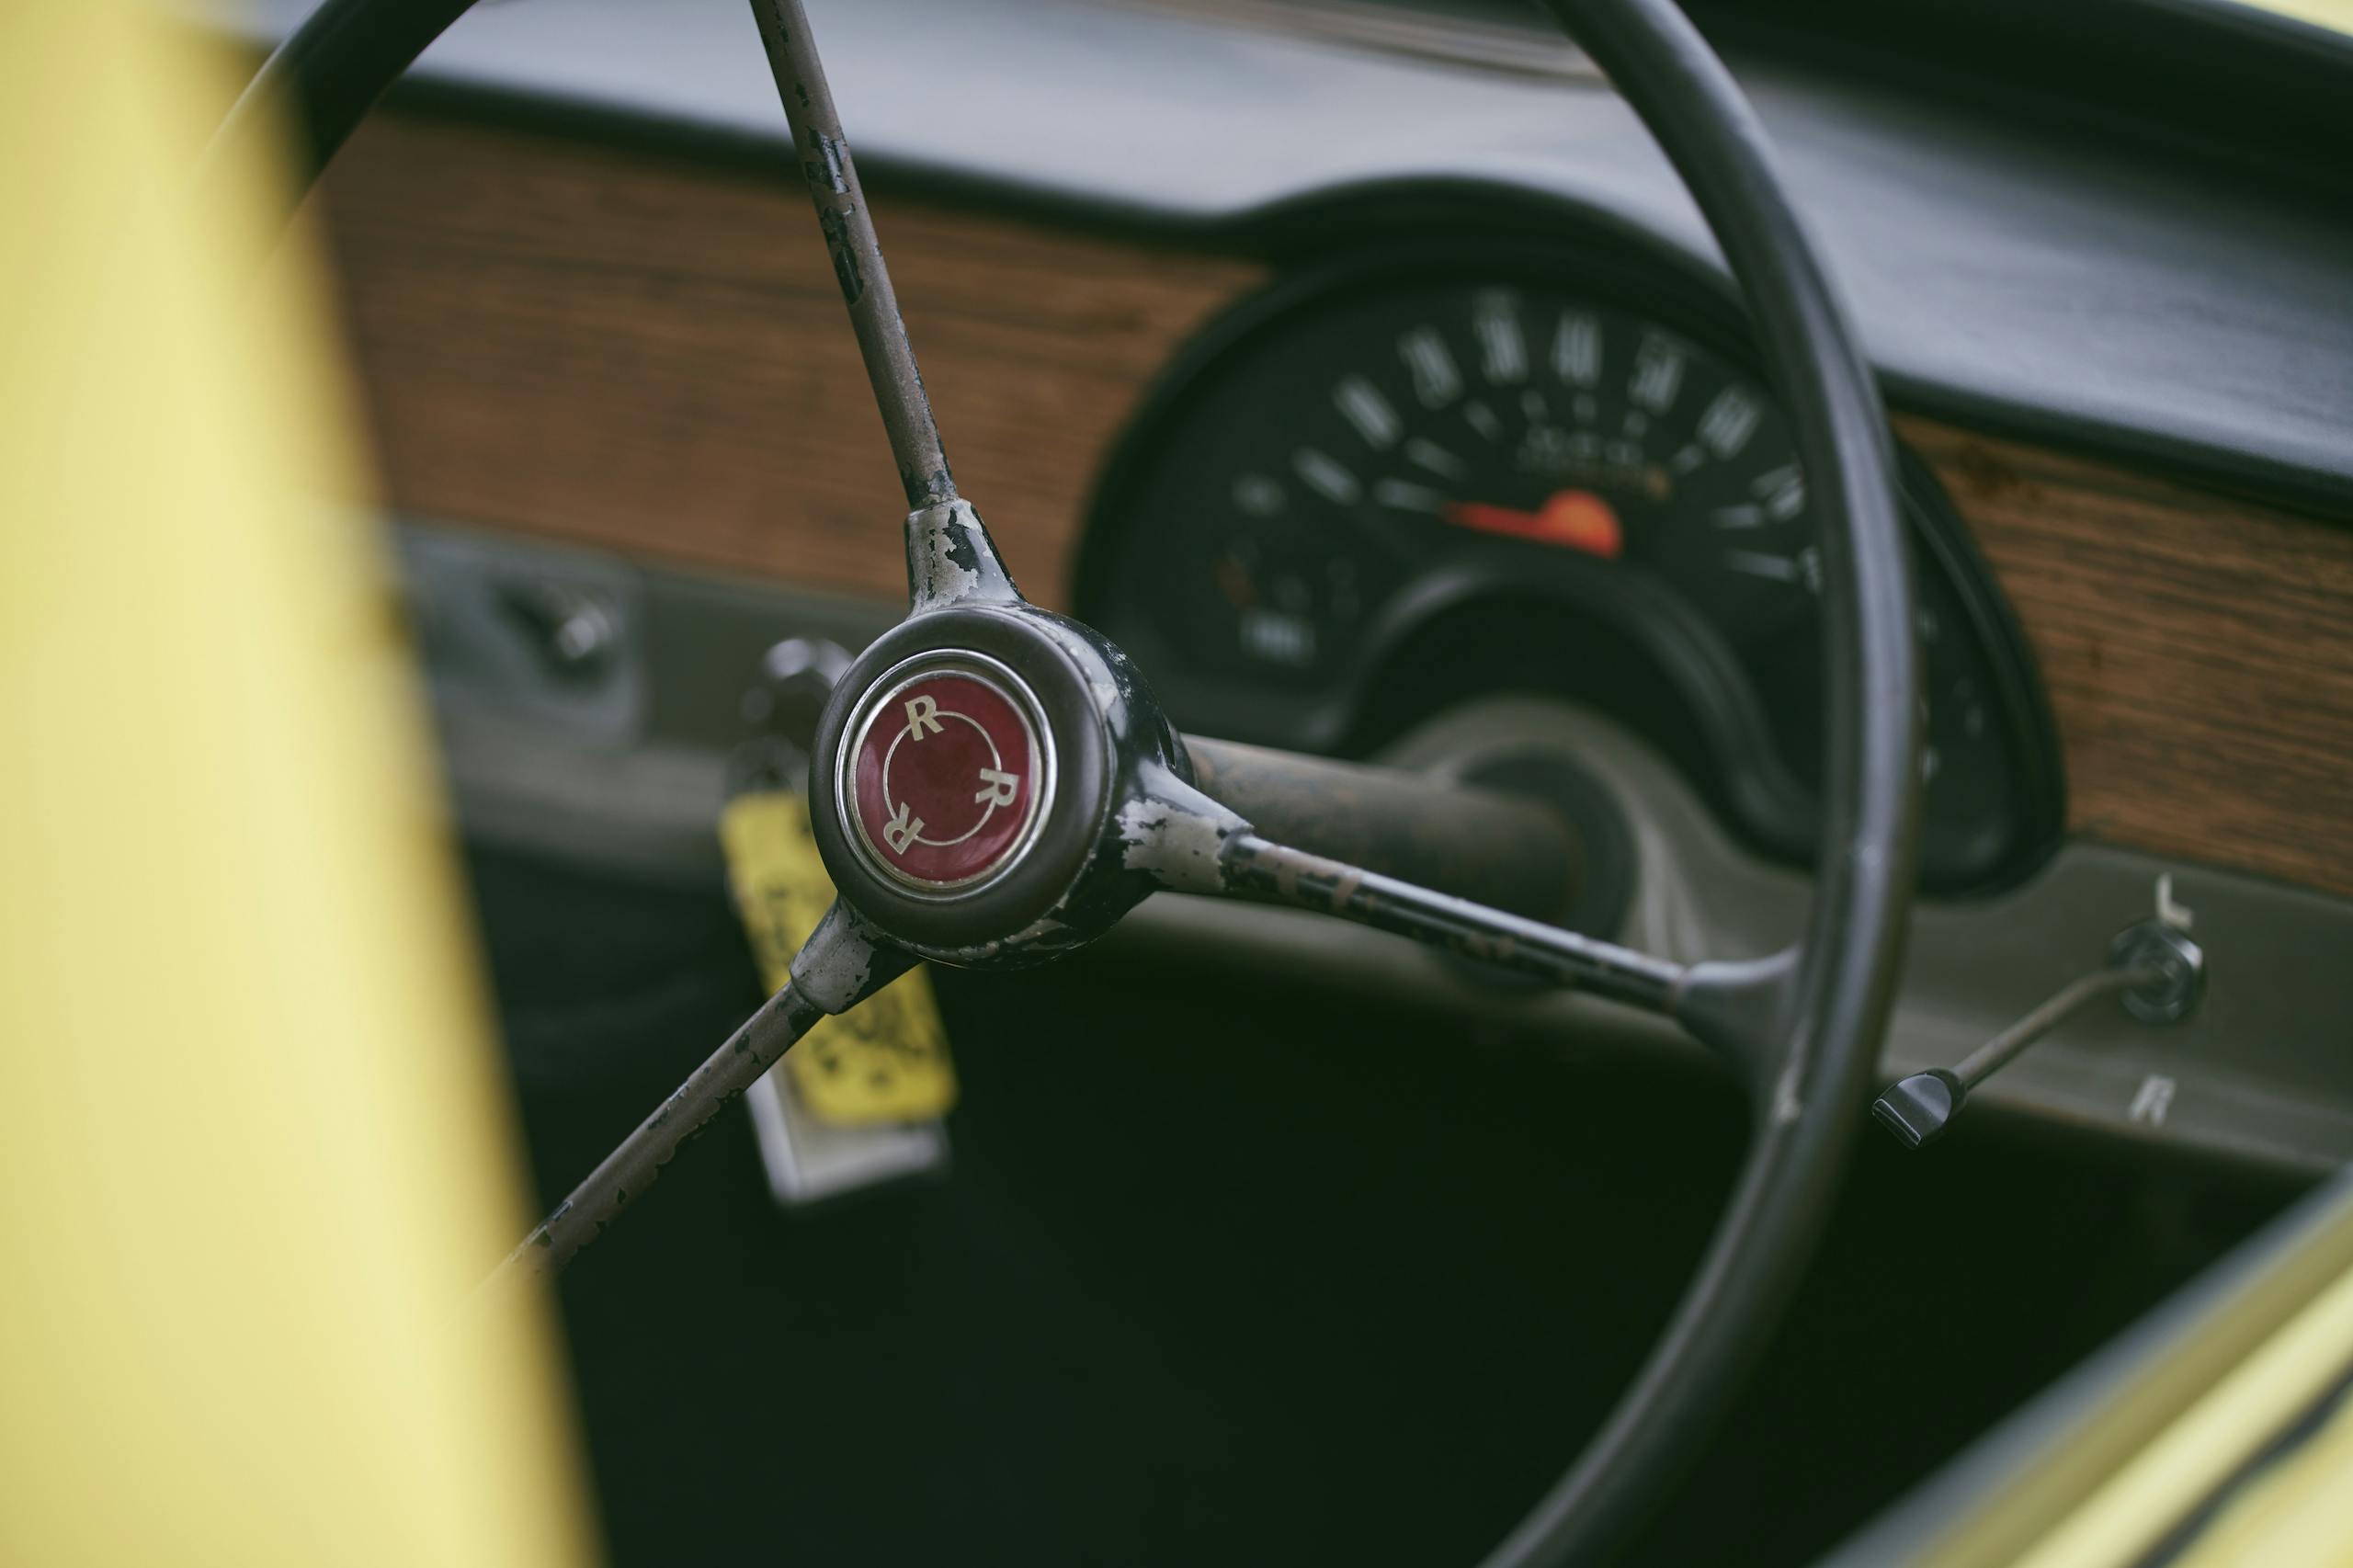 1971 Reliant Regal 330 interior steering wheel detail